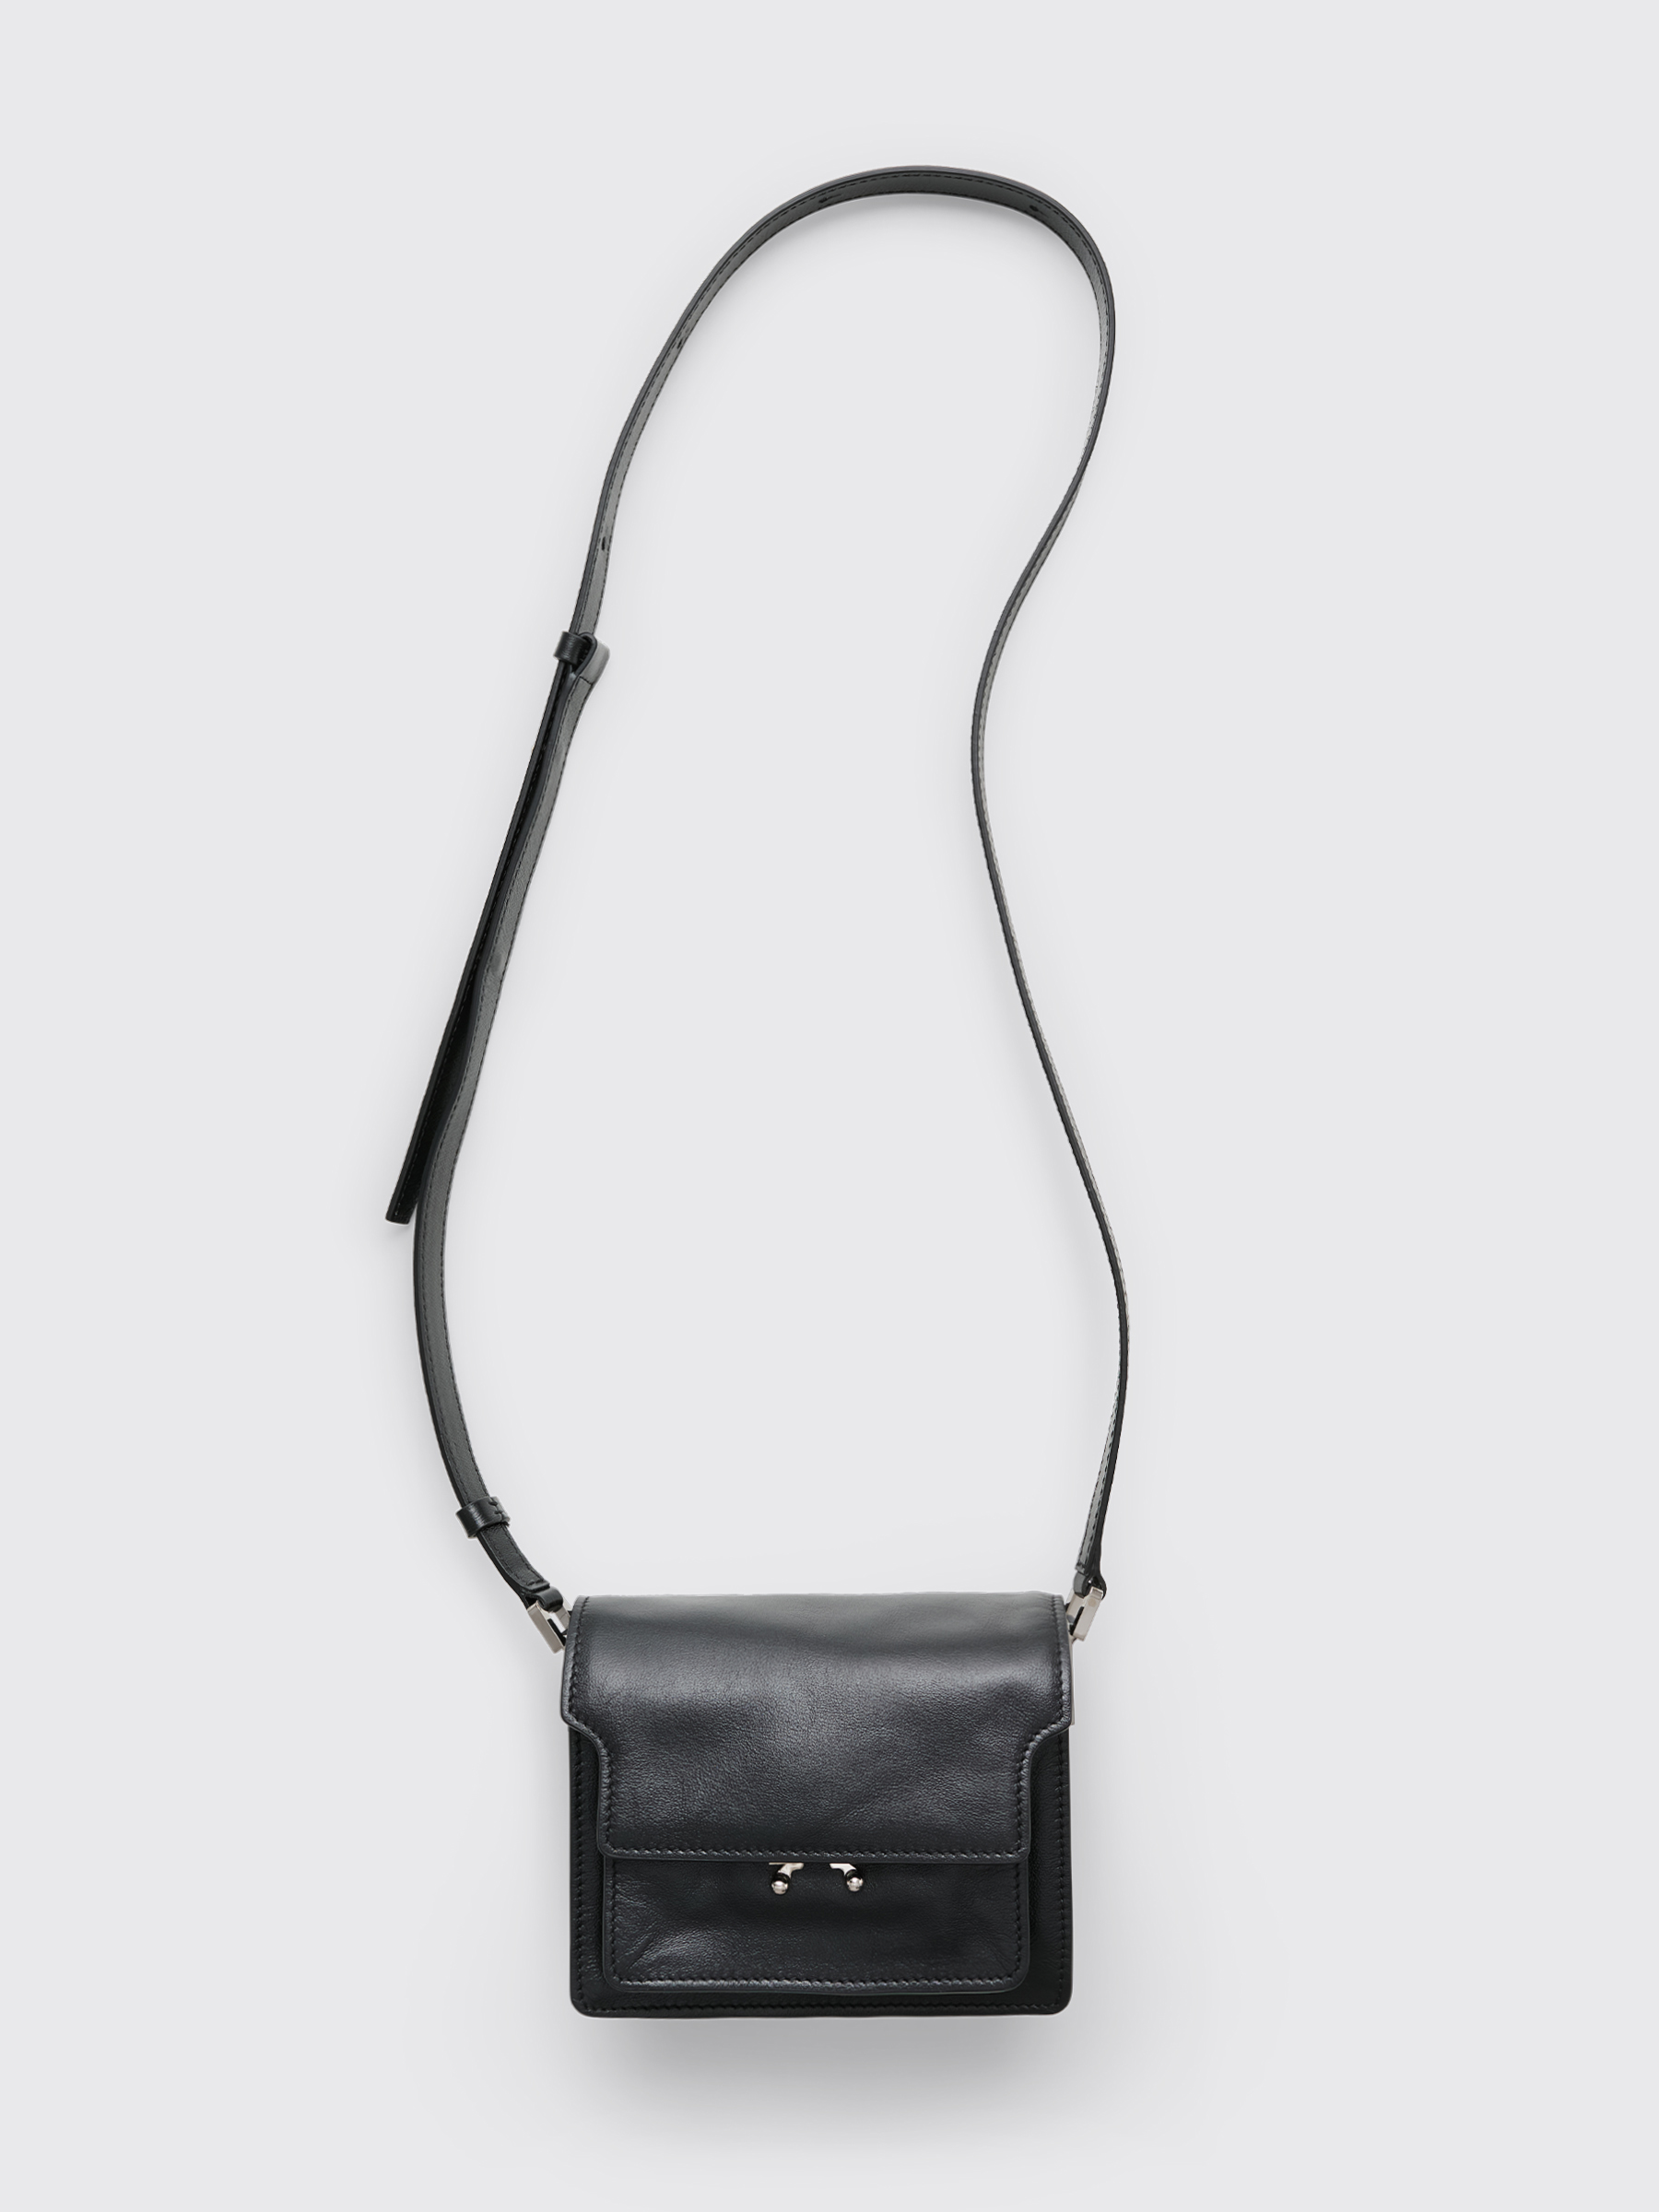 Marni Black Trunk Soft Mini Bag in Black Leather